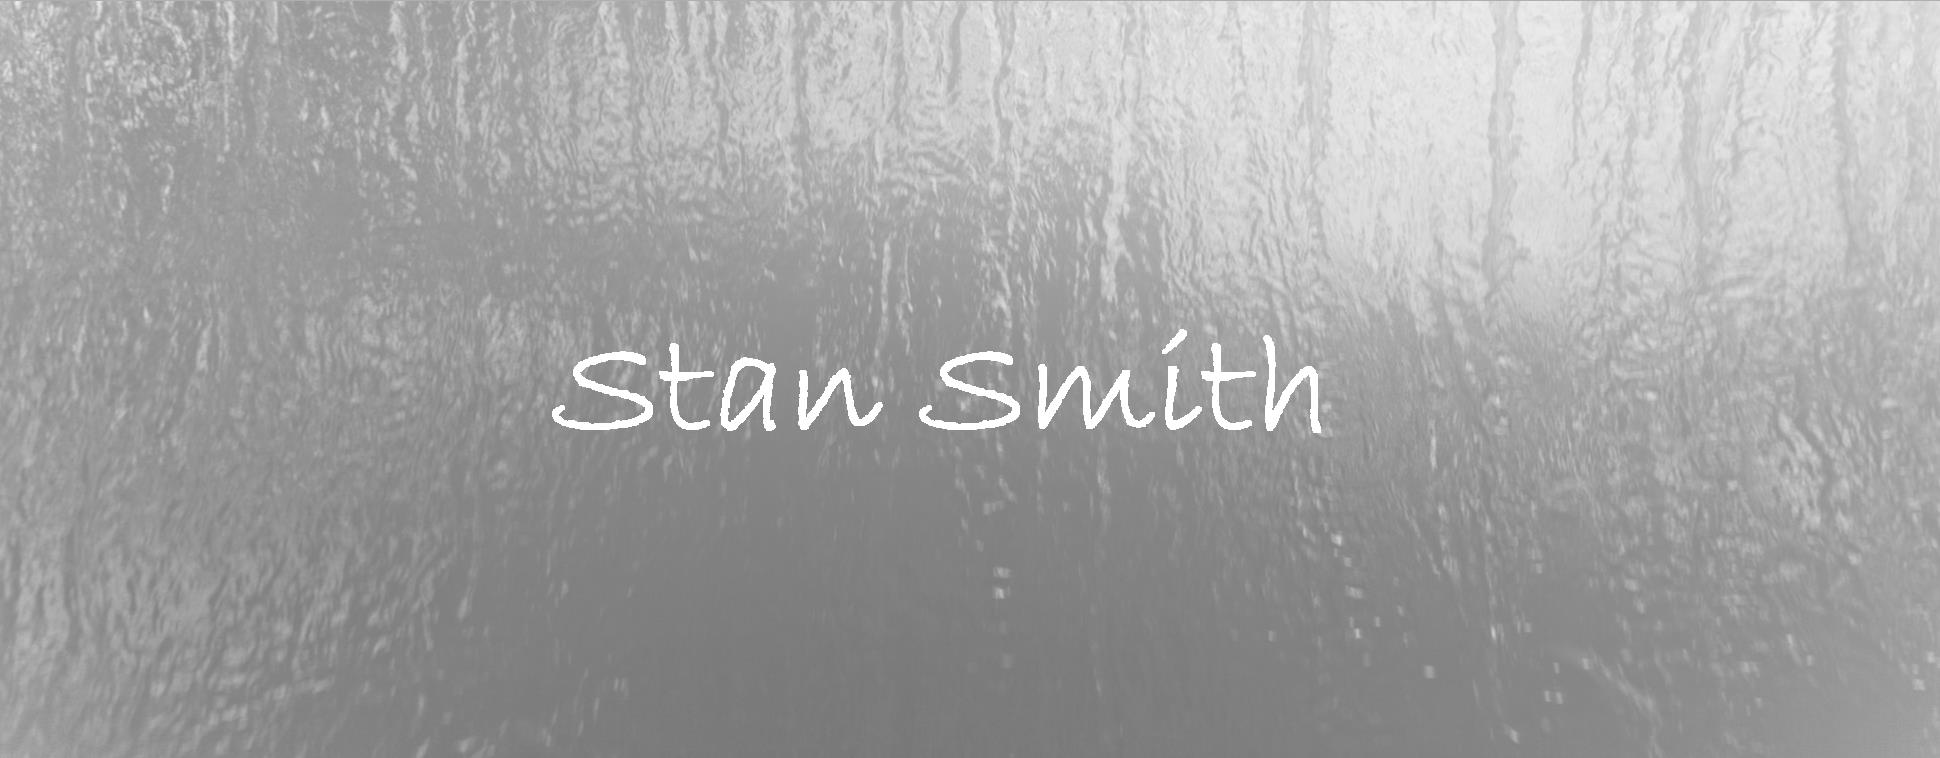 Stan Smith.jpg